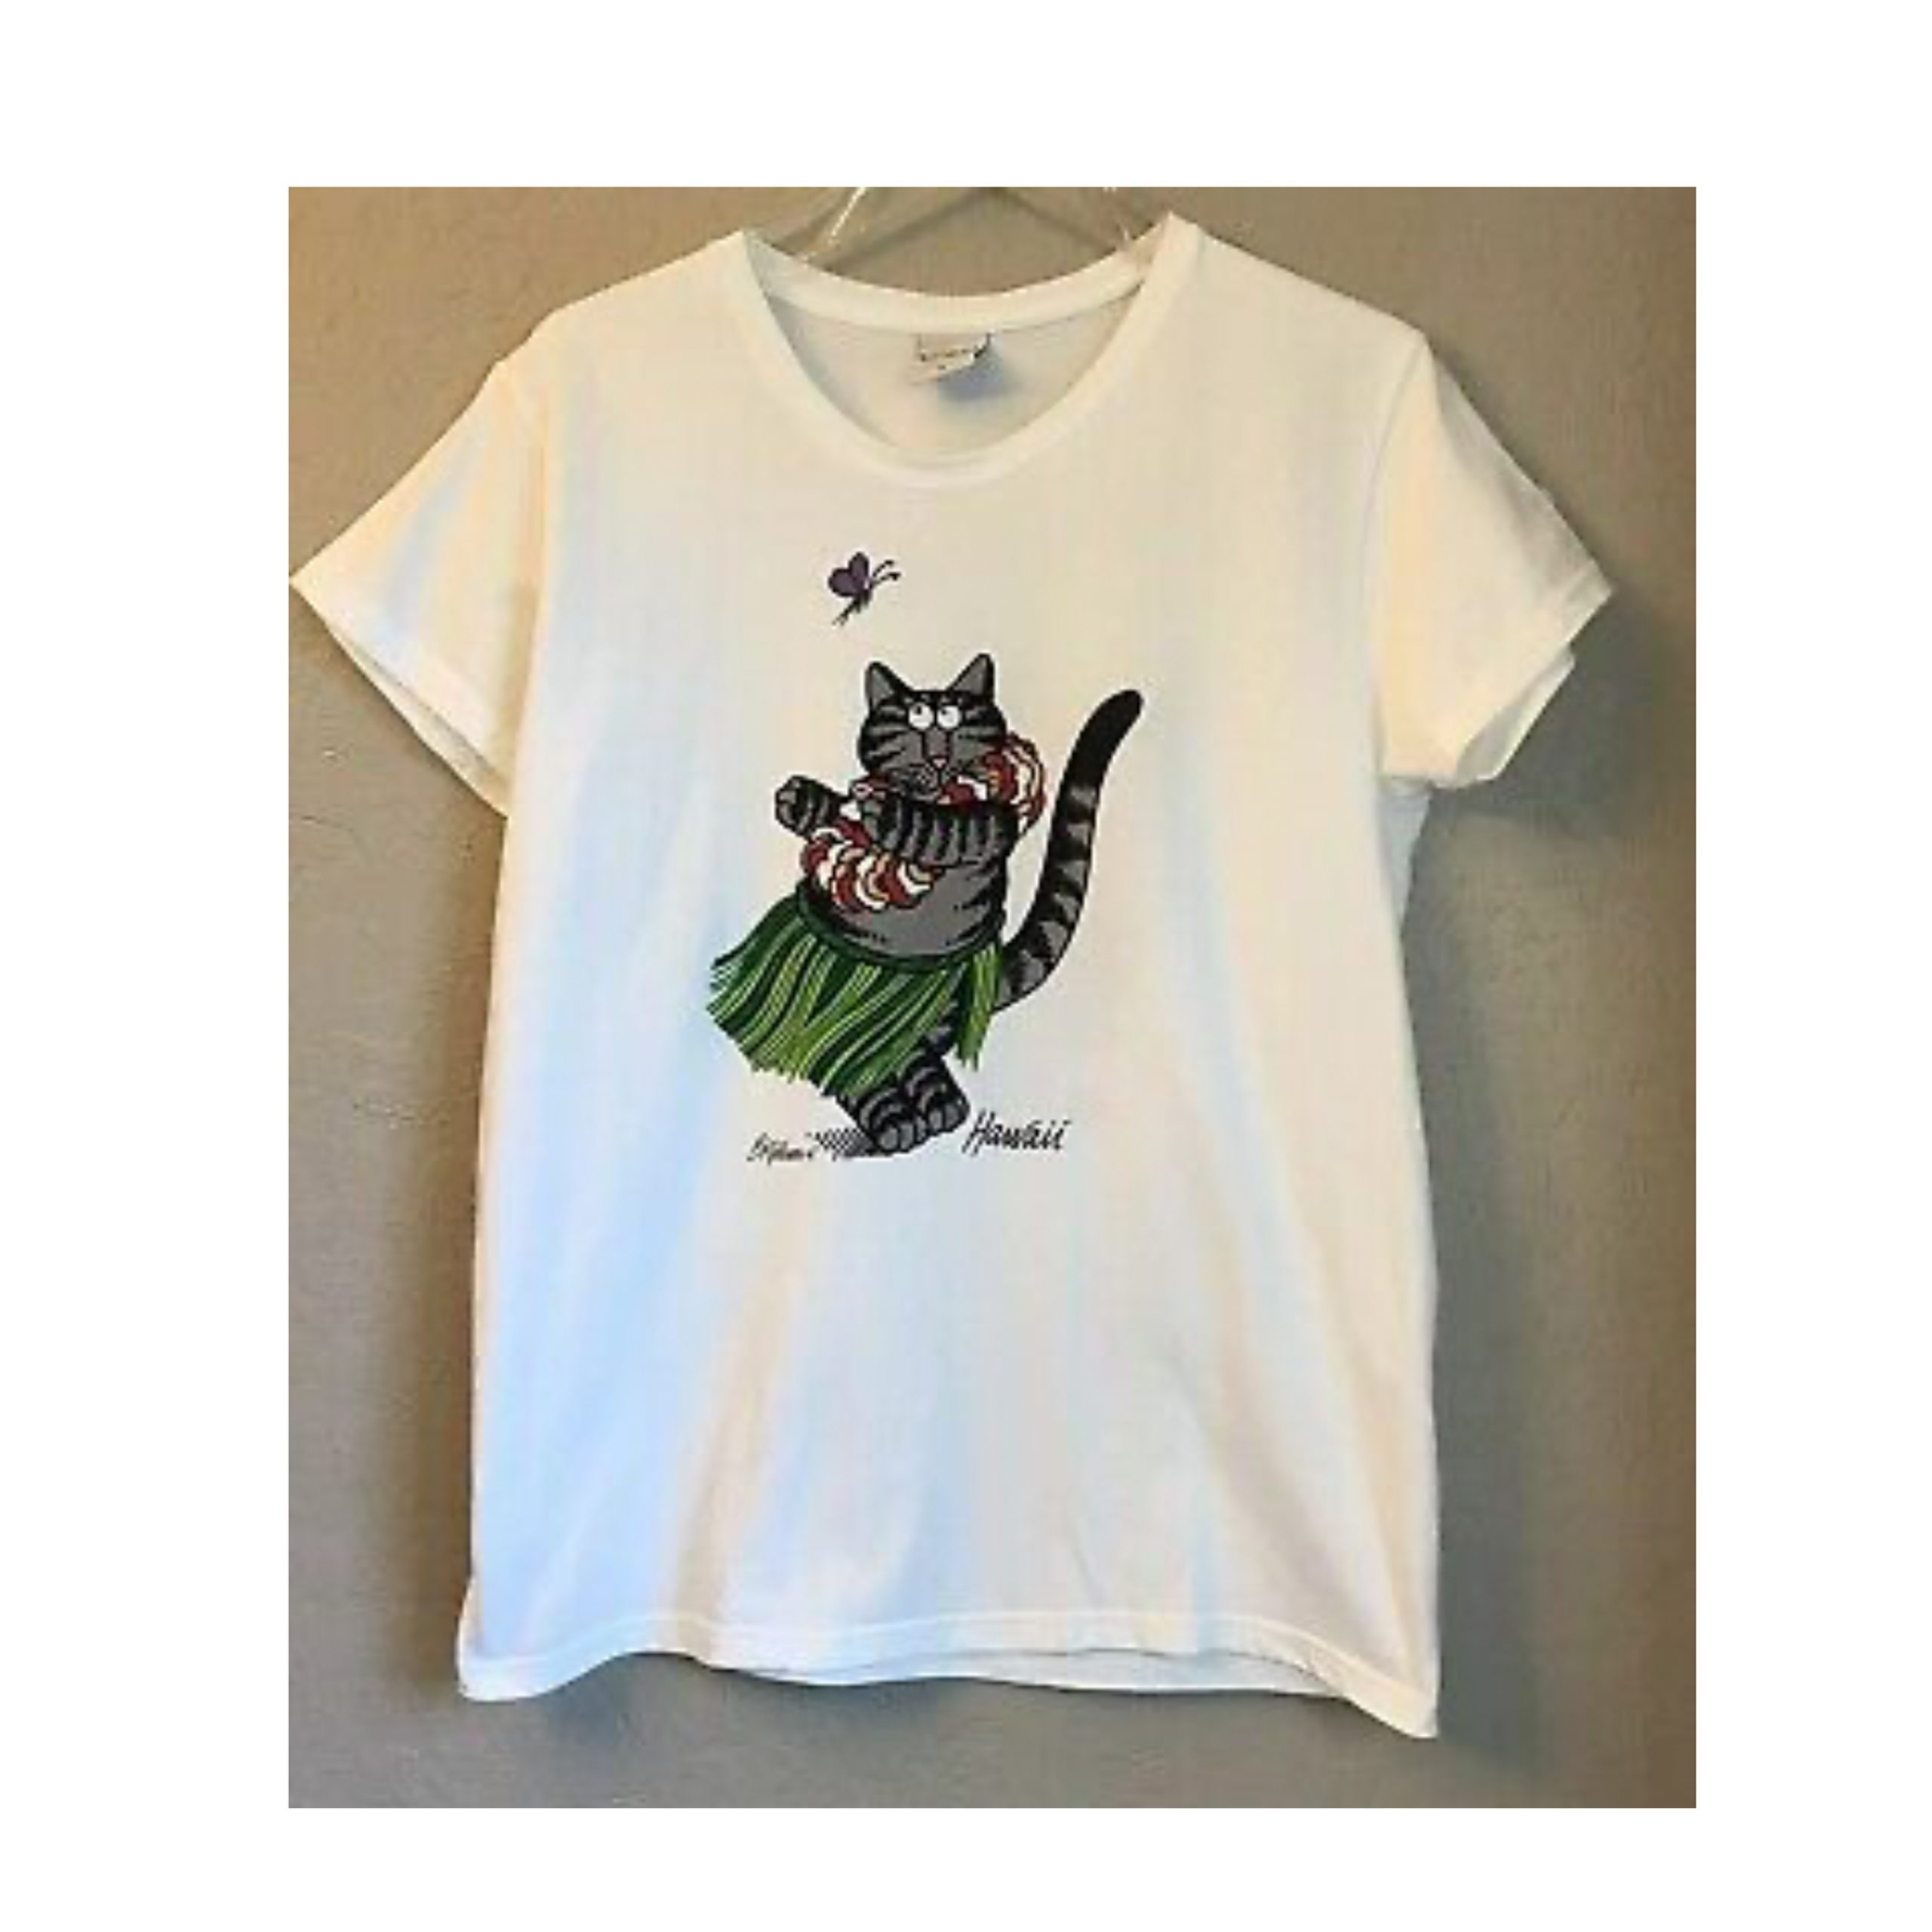 Cat dance T Shirt SR25F0